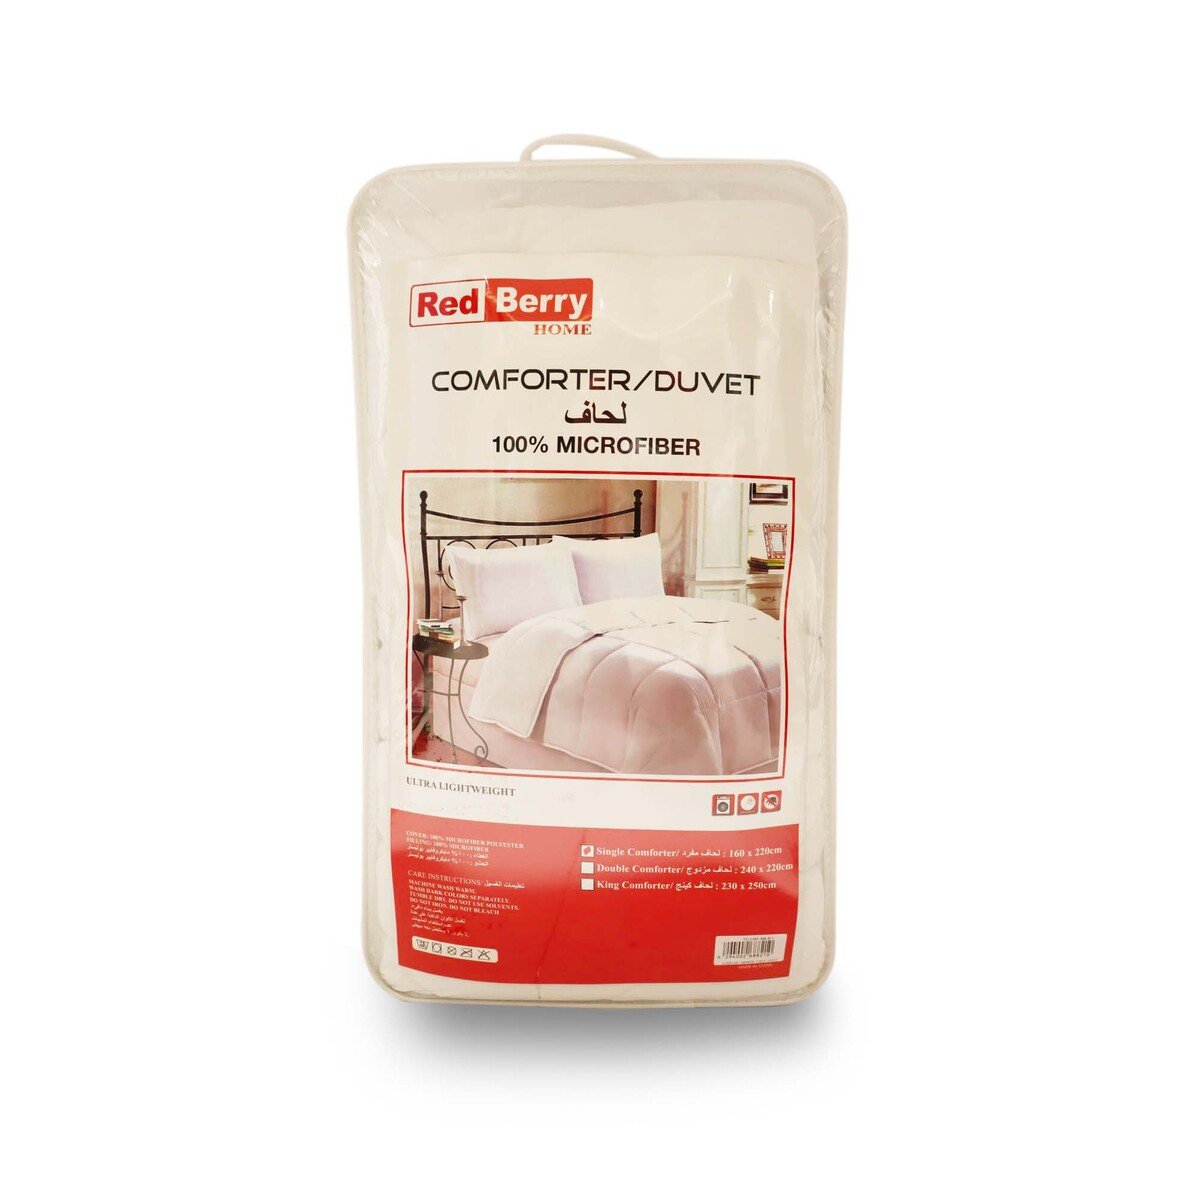 Red Berry Duvet Comforter Single 160x220cm White Color